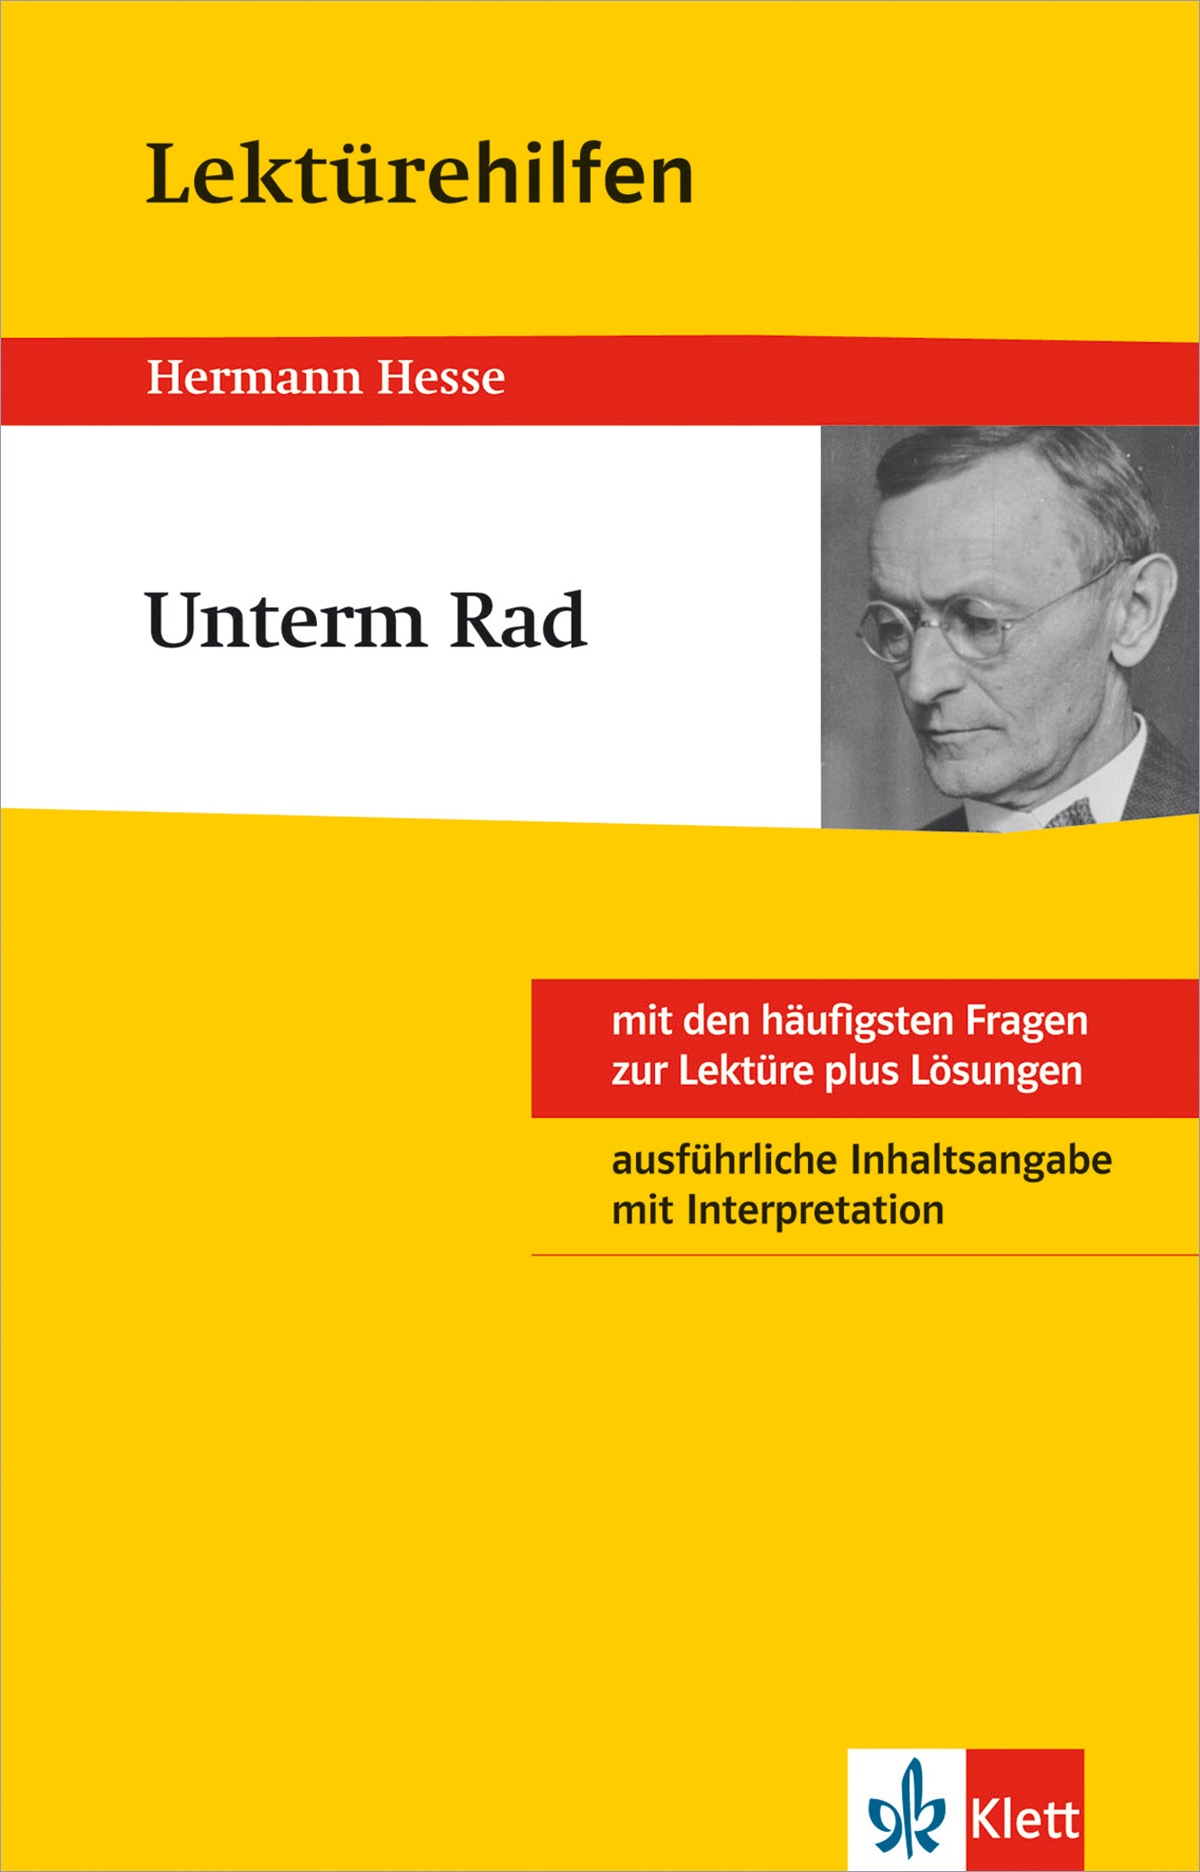 Klett Lektürehilfen Hermann Hesse, Unterm Rad